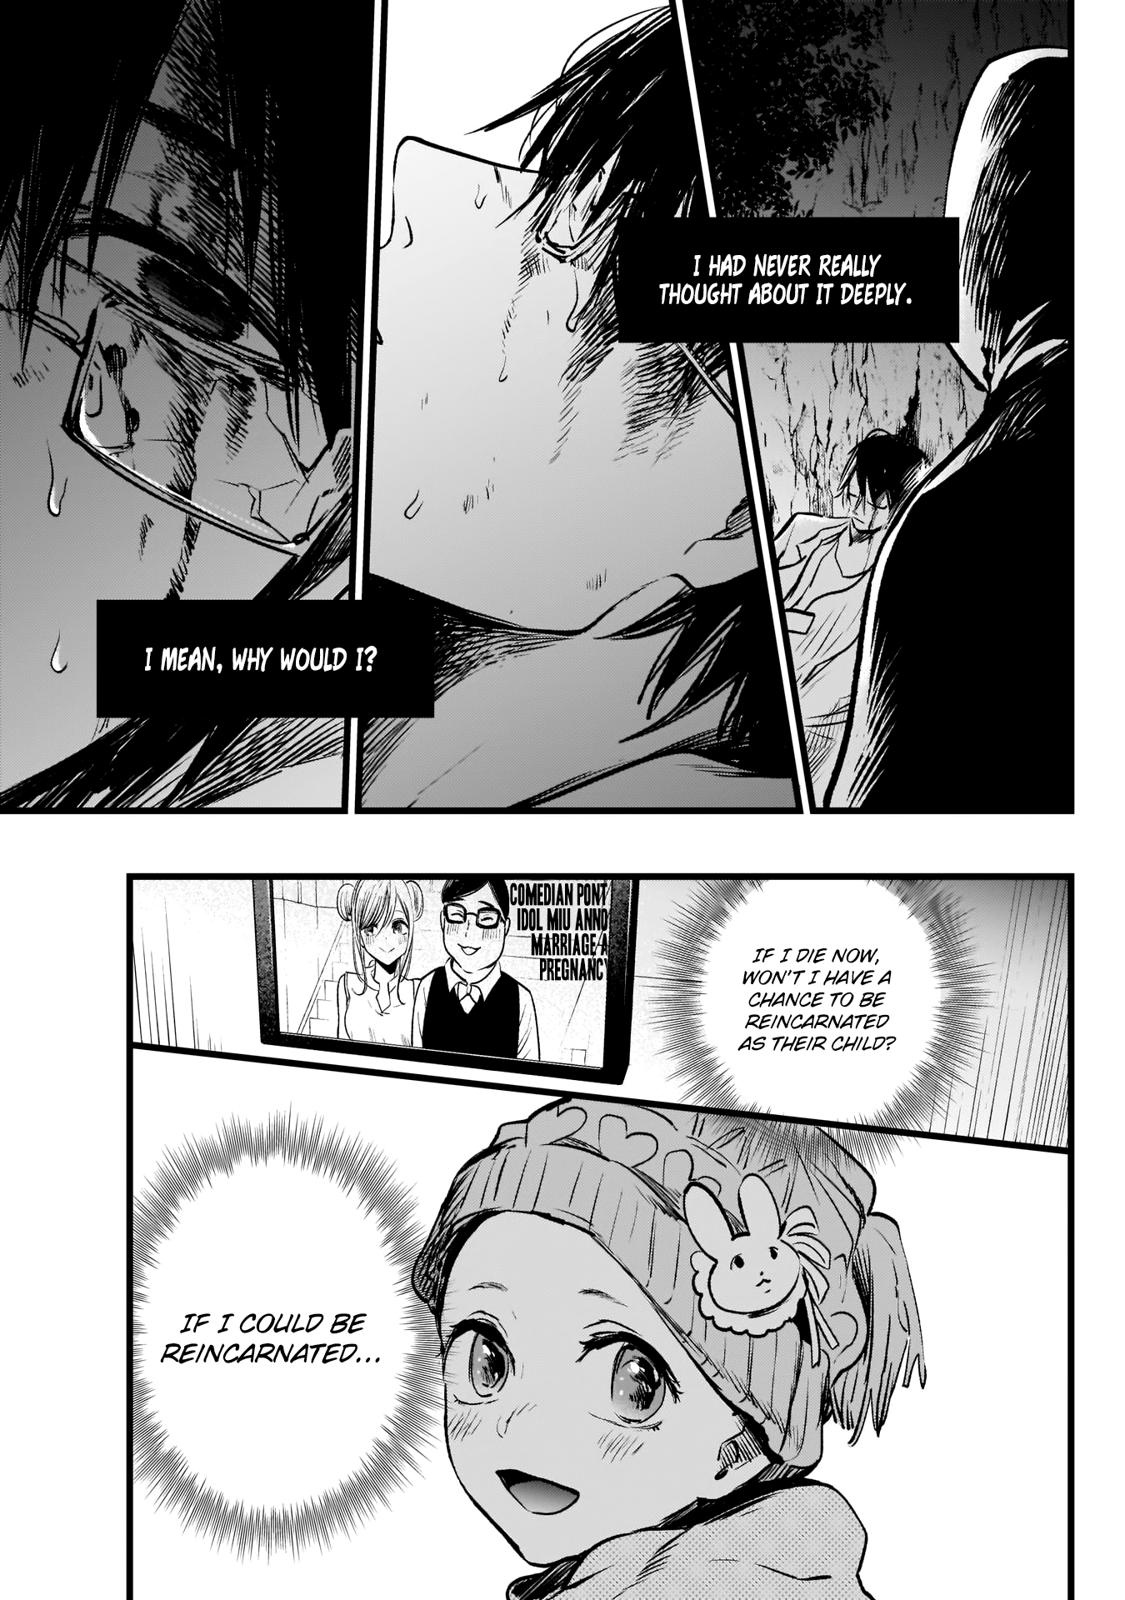 Oshi No Ko Manga Manga Chapter - 1 - image 39